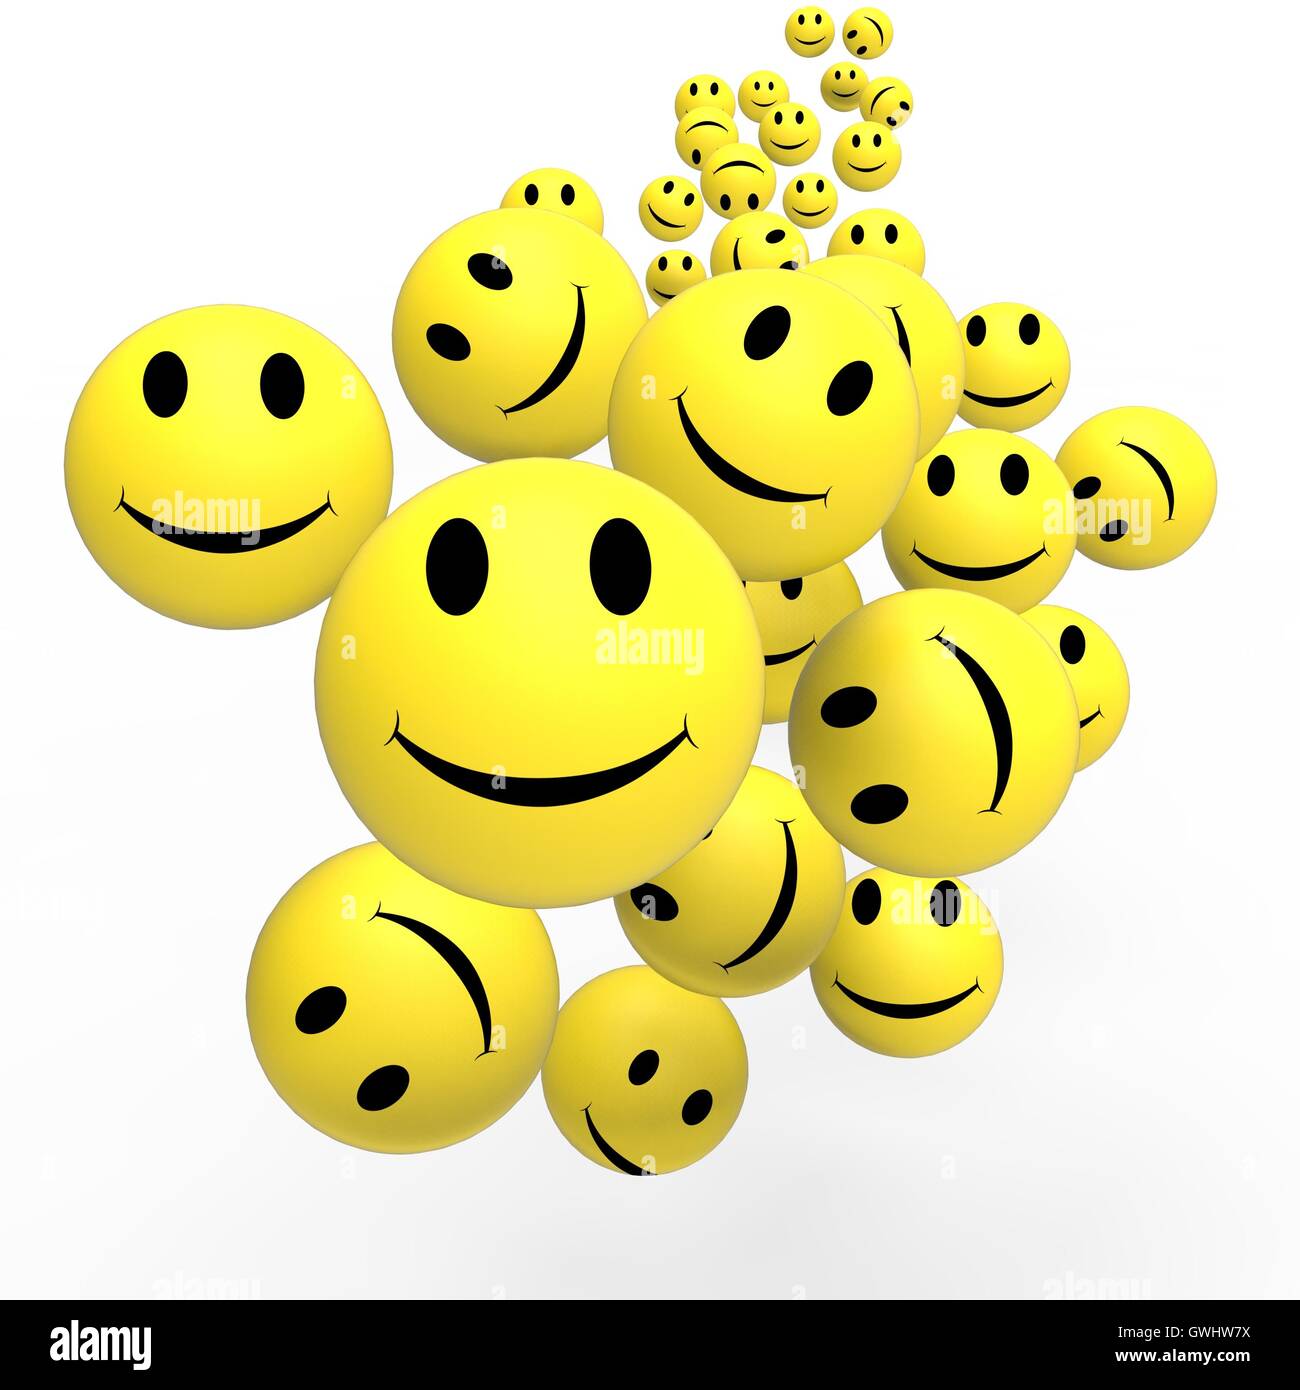 Smileys Show Happy Positive Faces Stock Photo